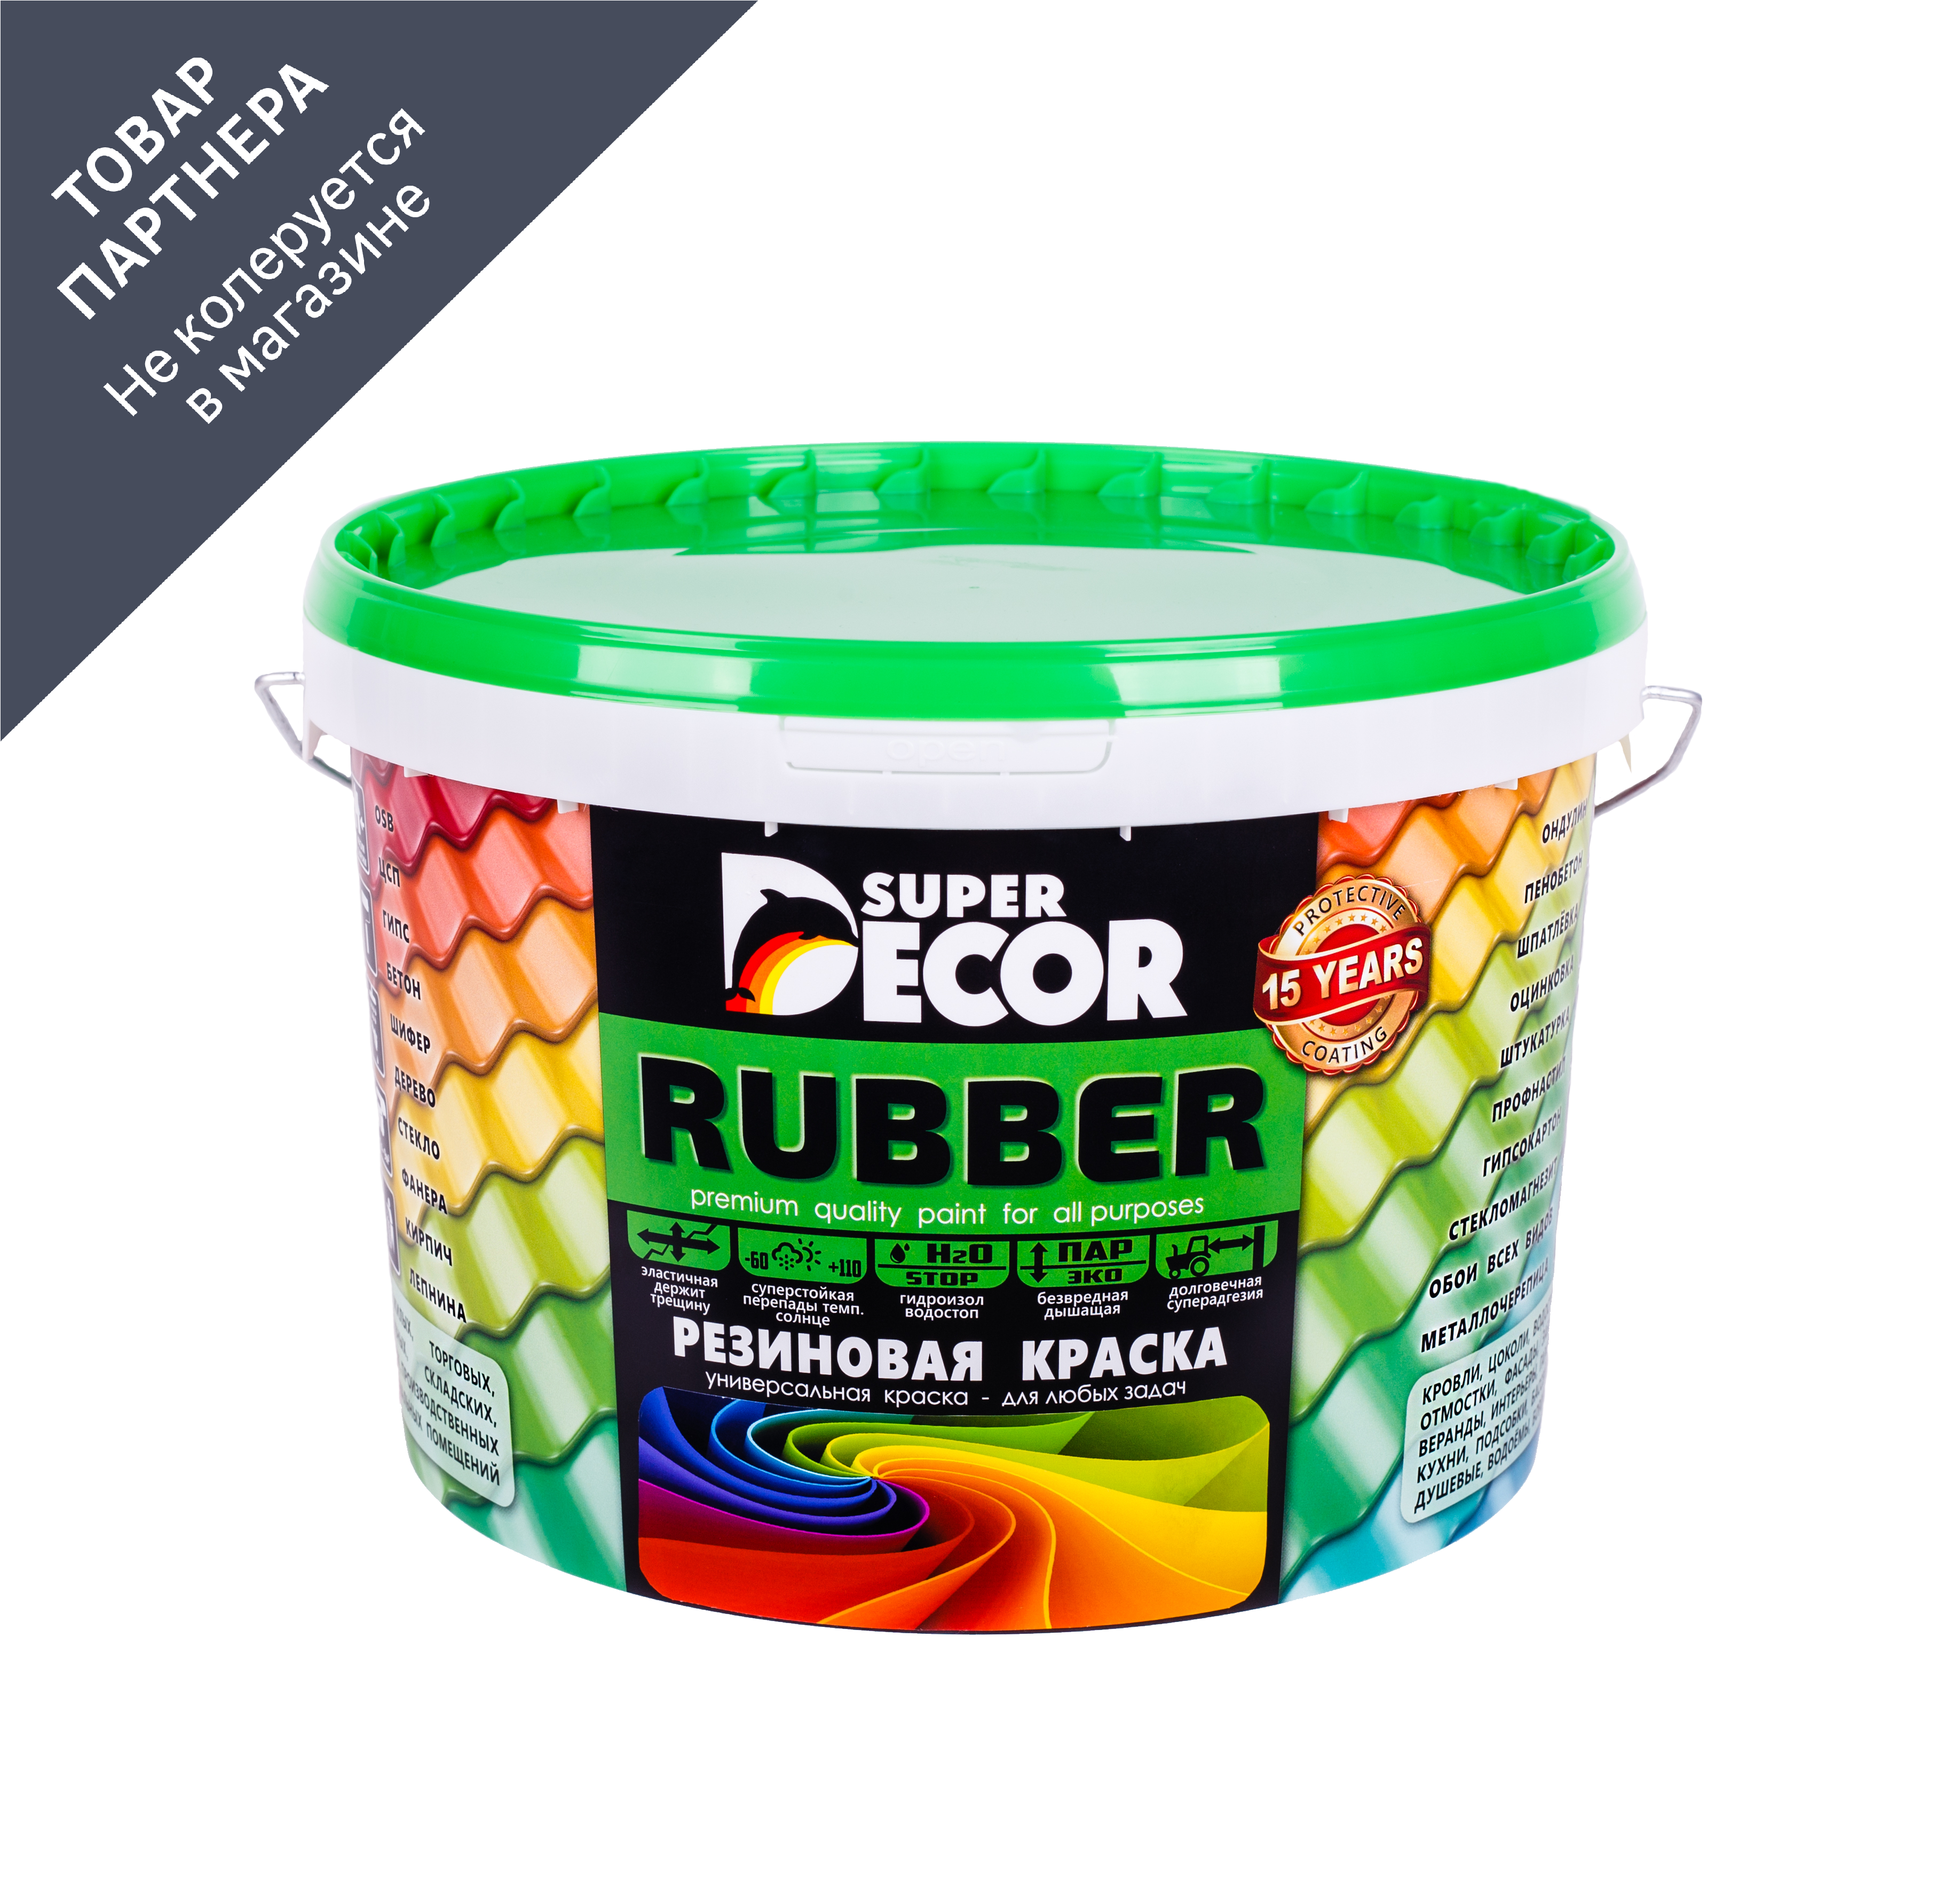 90174488 Краска резиновая Rubber цвет № 10 Морская волна 3 кг STLM-0123550 SUPER DECOR